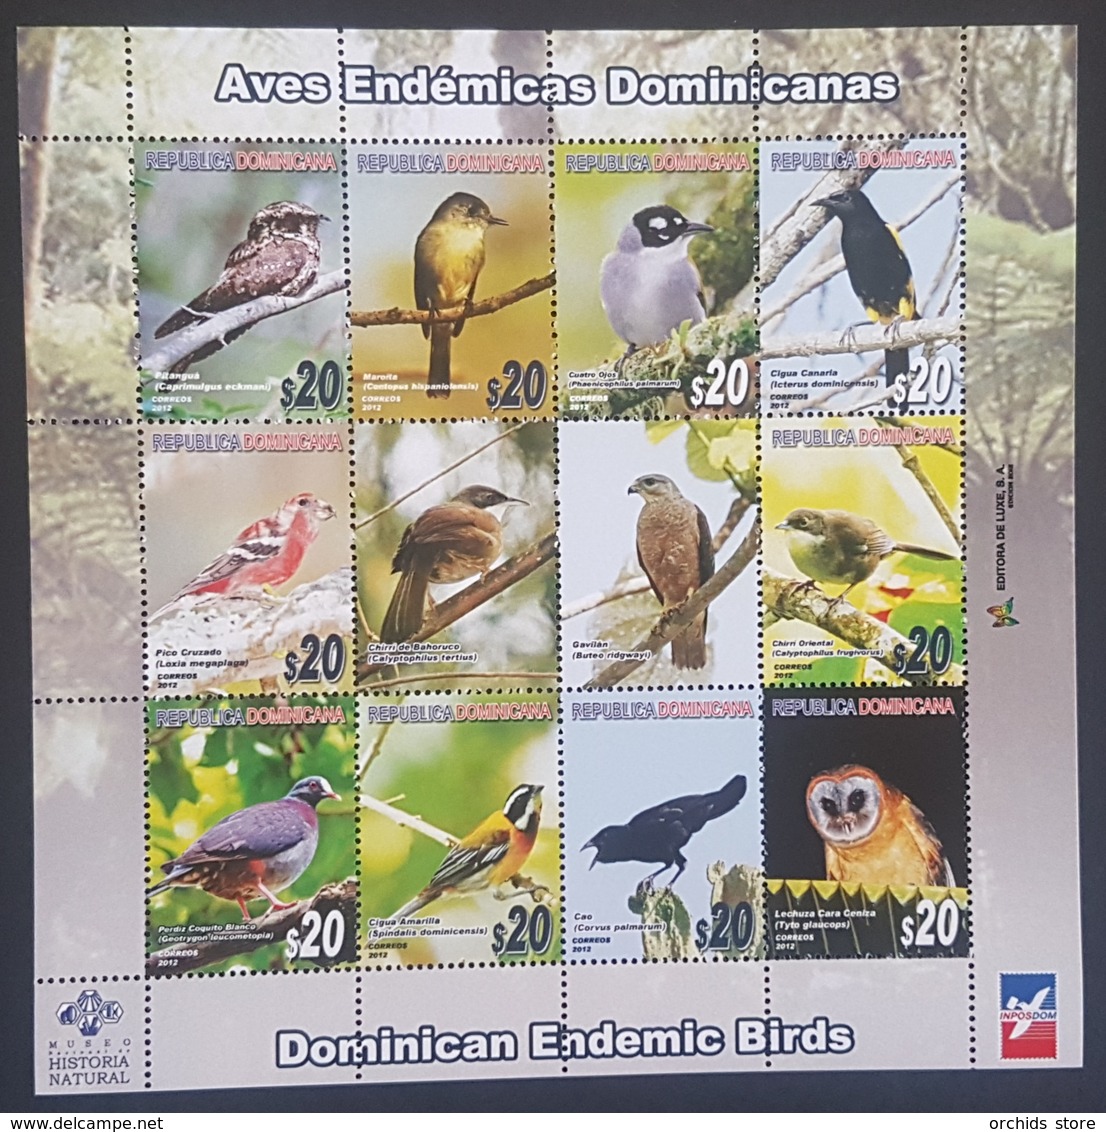 DE23 - Dominican Republic 2012 Birds Sc 1529 FULL SHEET S/S - MNH - Dominican Republic